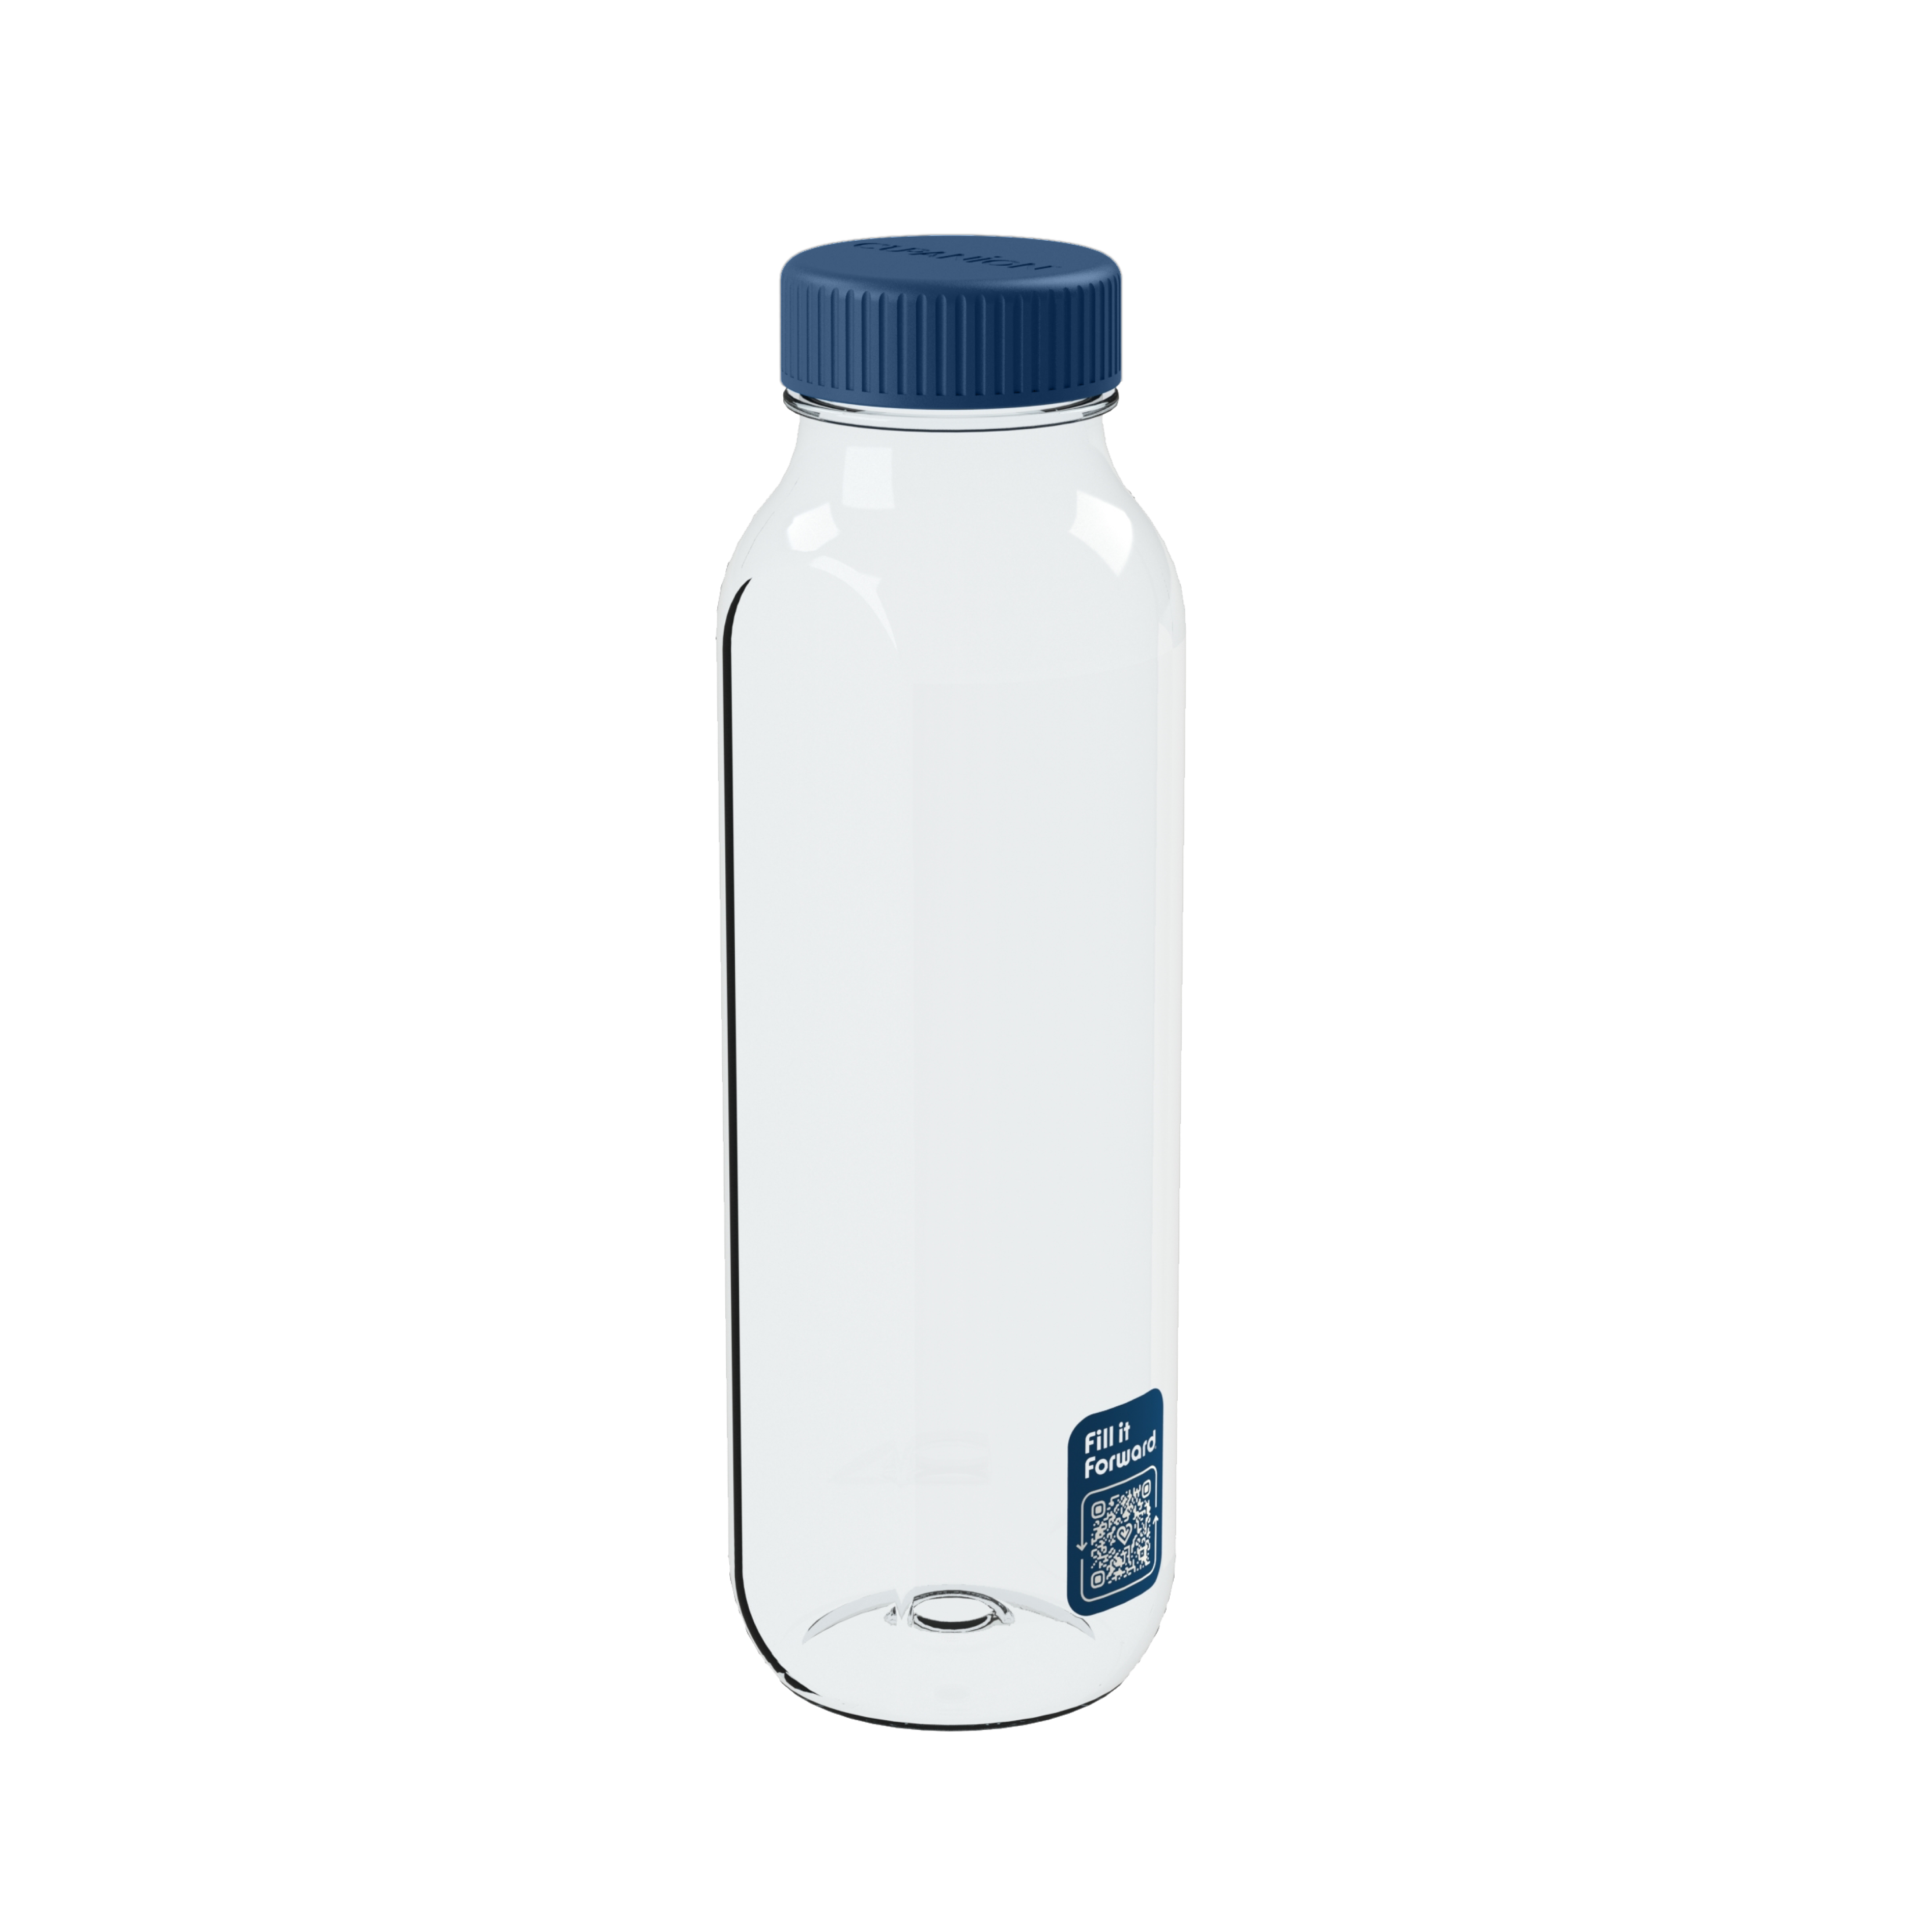 Cupanion Bottle